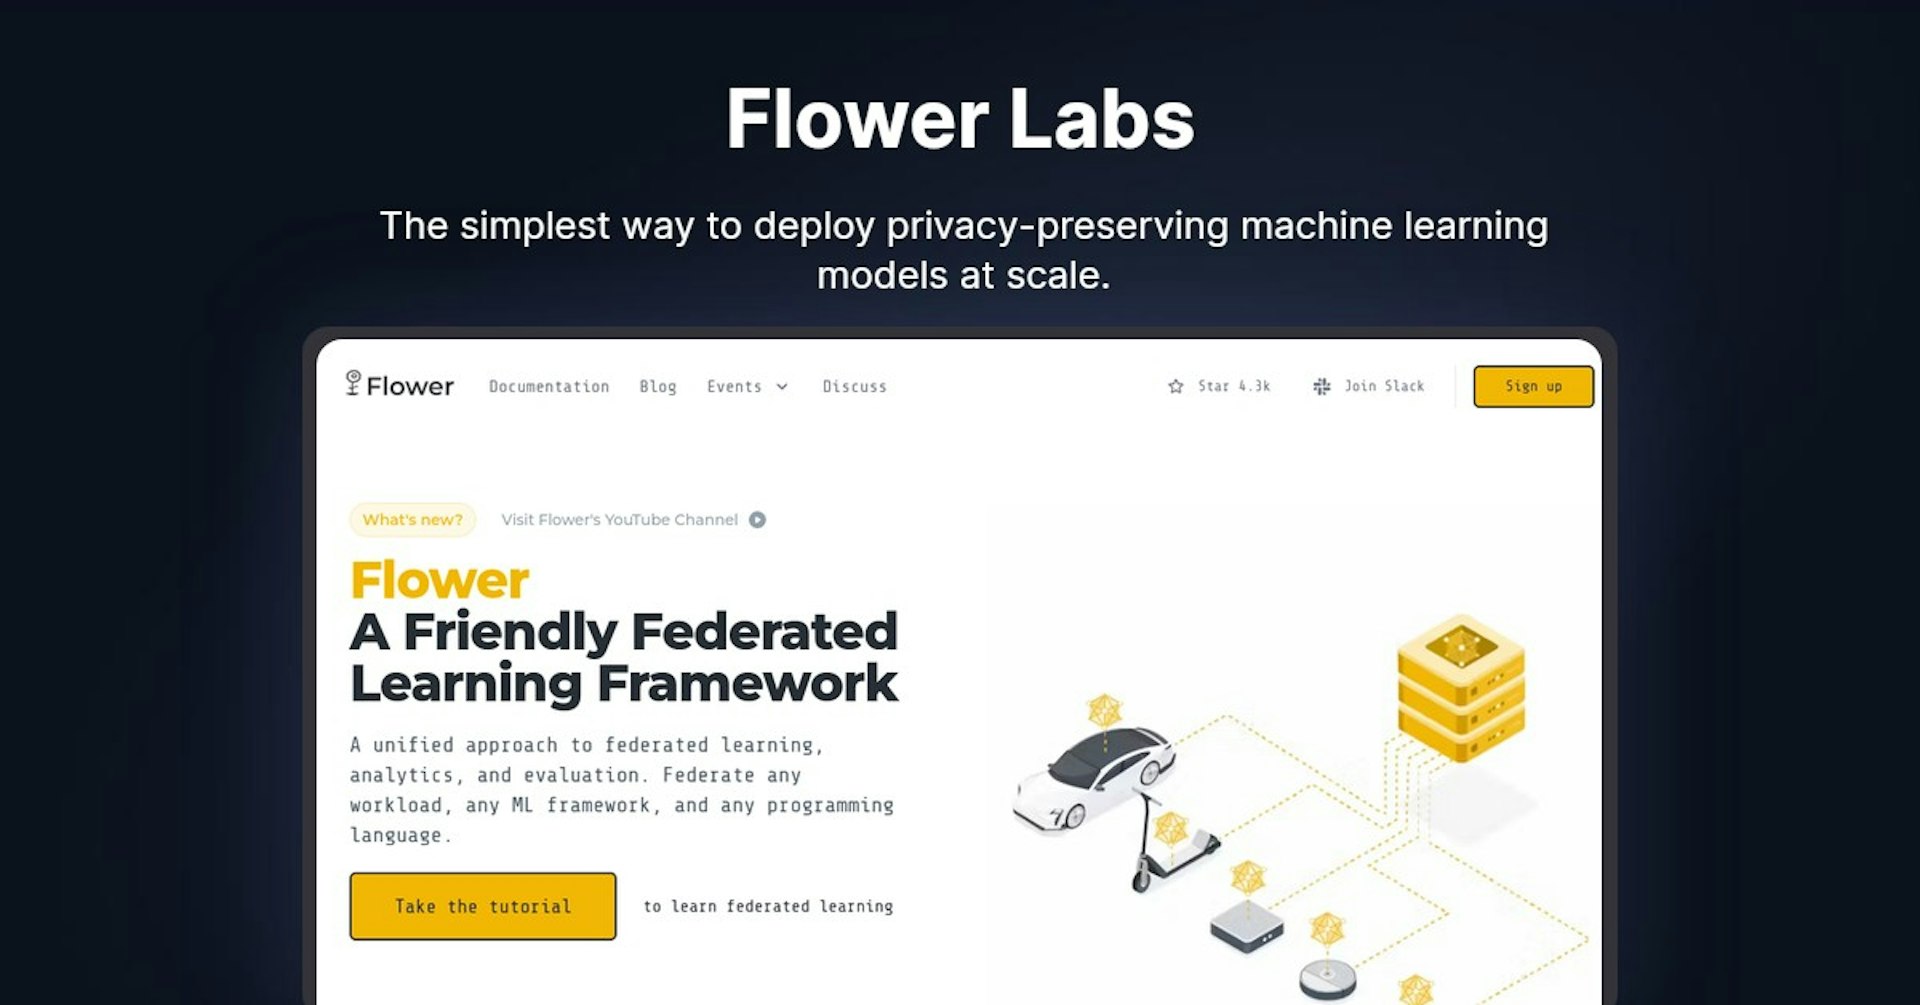 Flower Labs